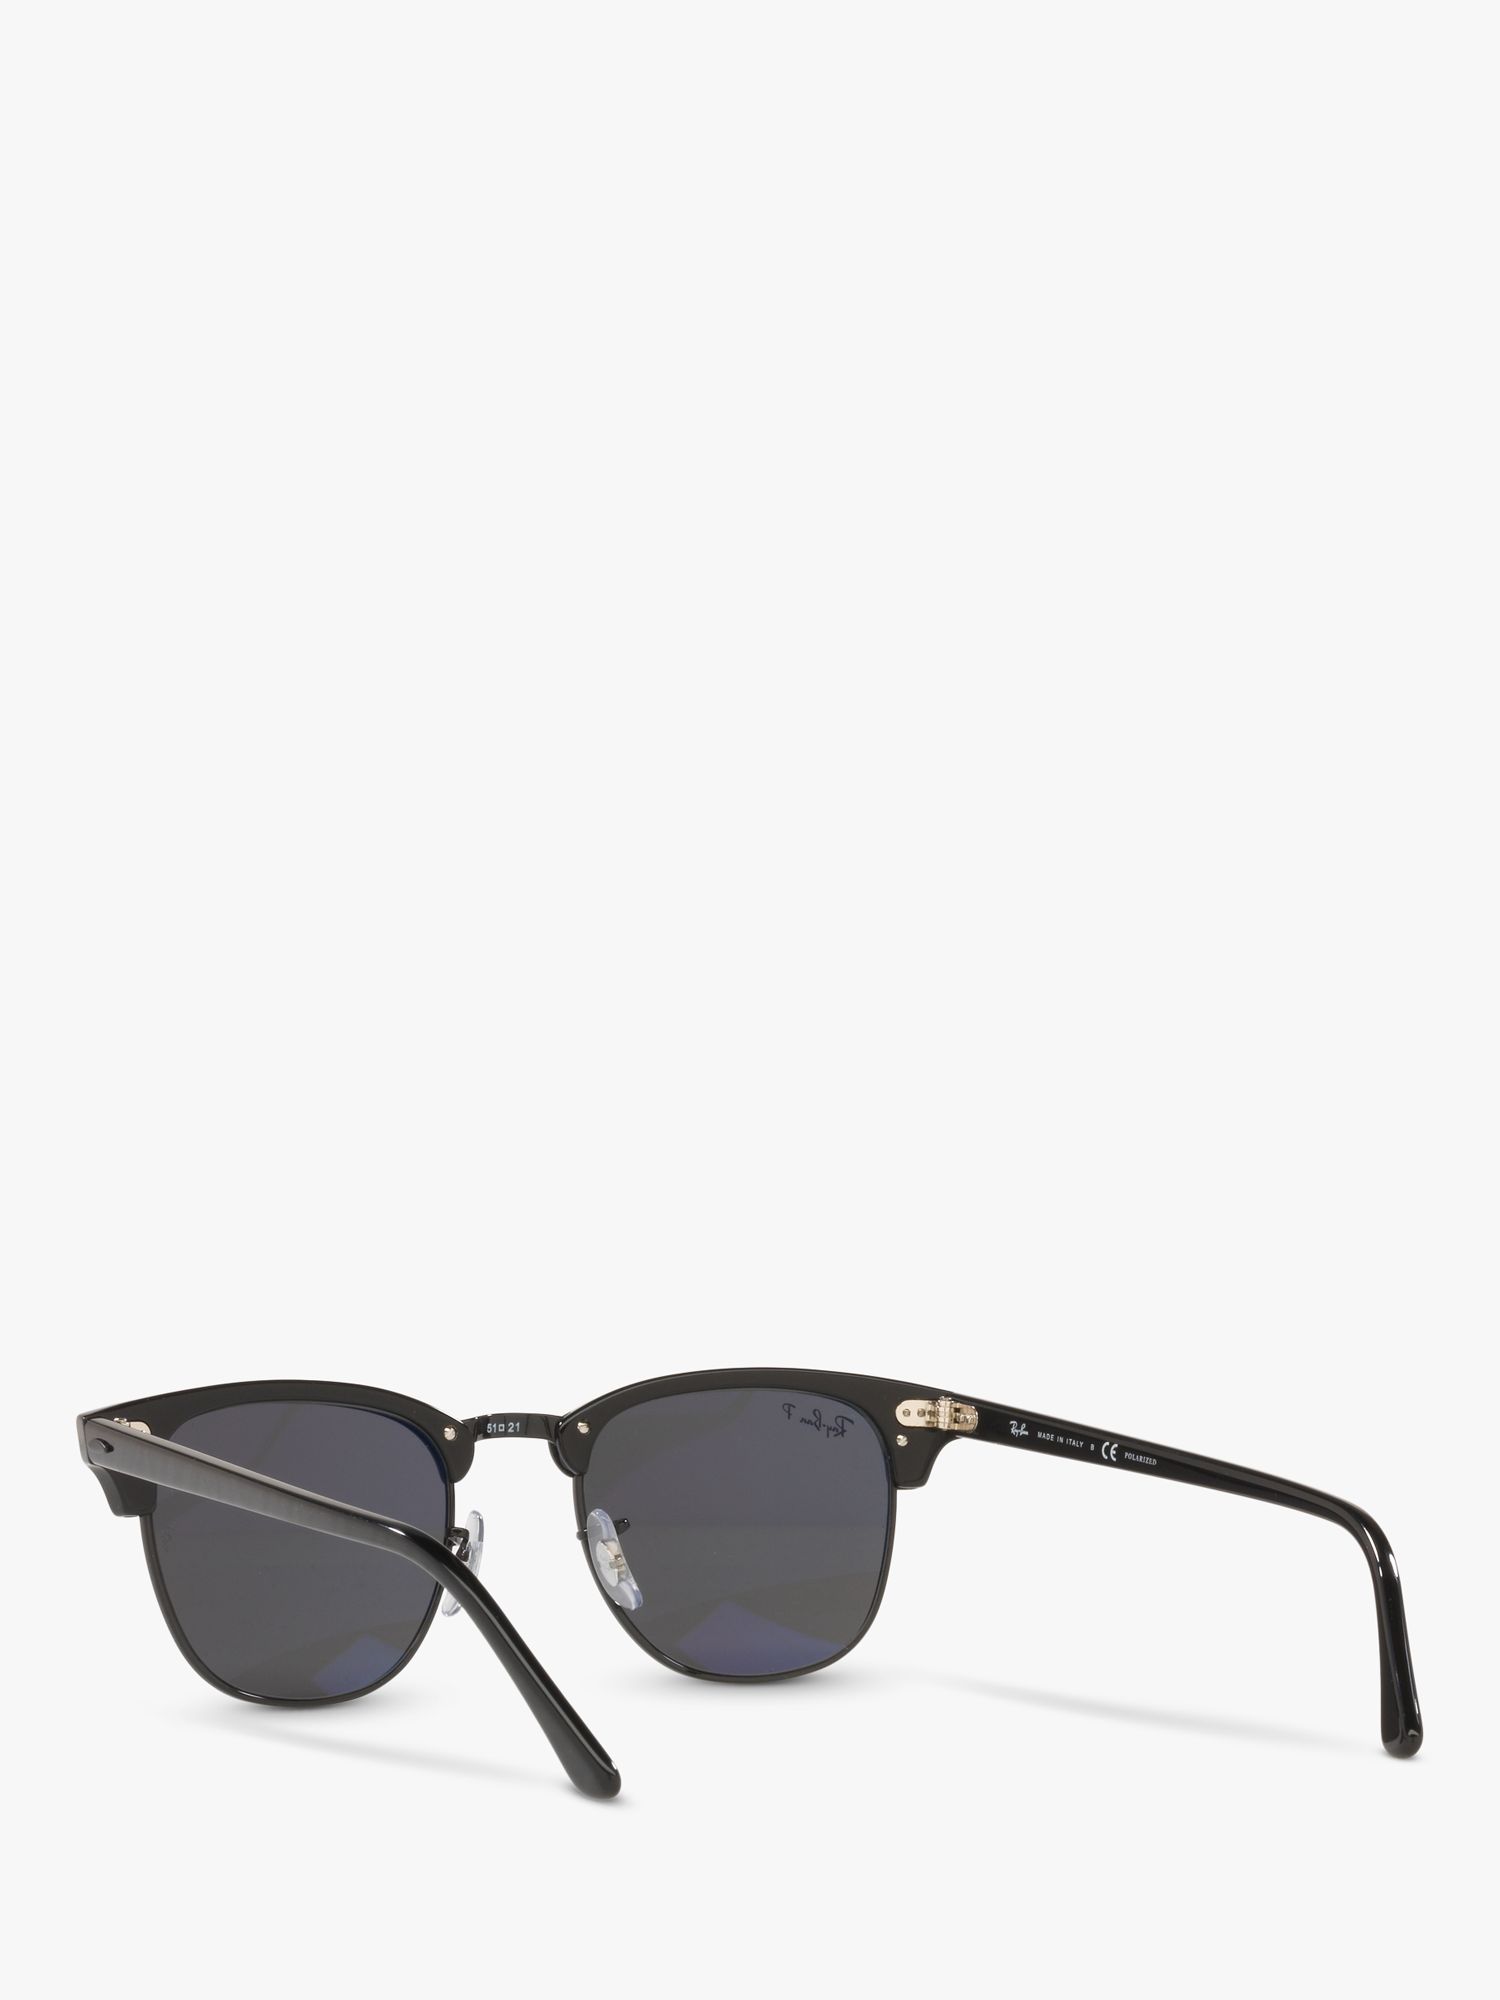 Ray Ban Rb3016 Unisex Polarised Clubmaster Sunglasses Black Grey At John Lewis Partners